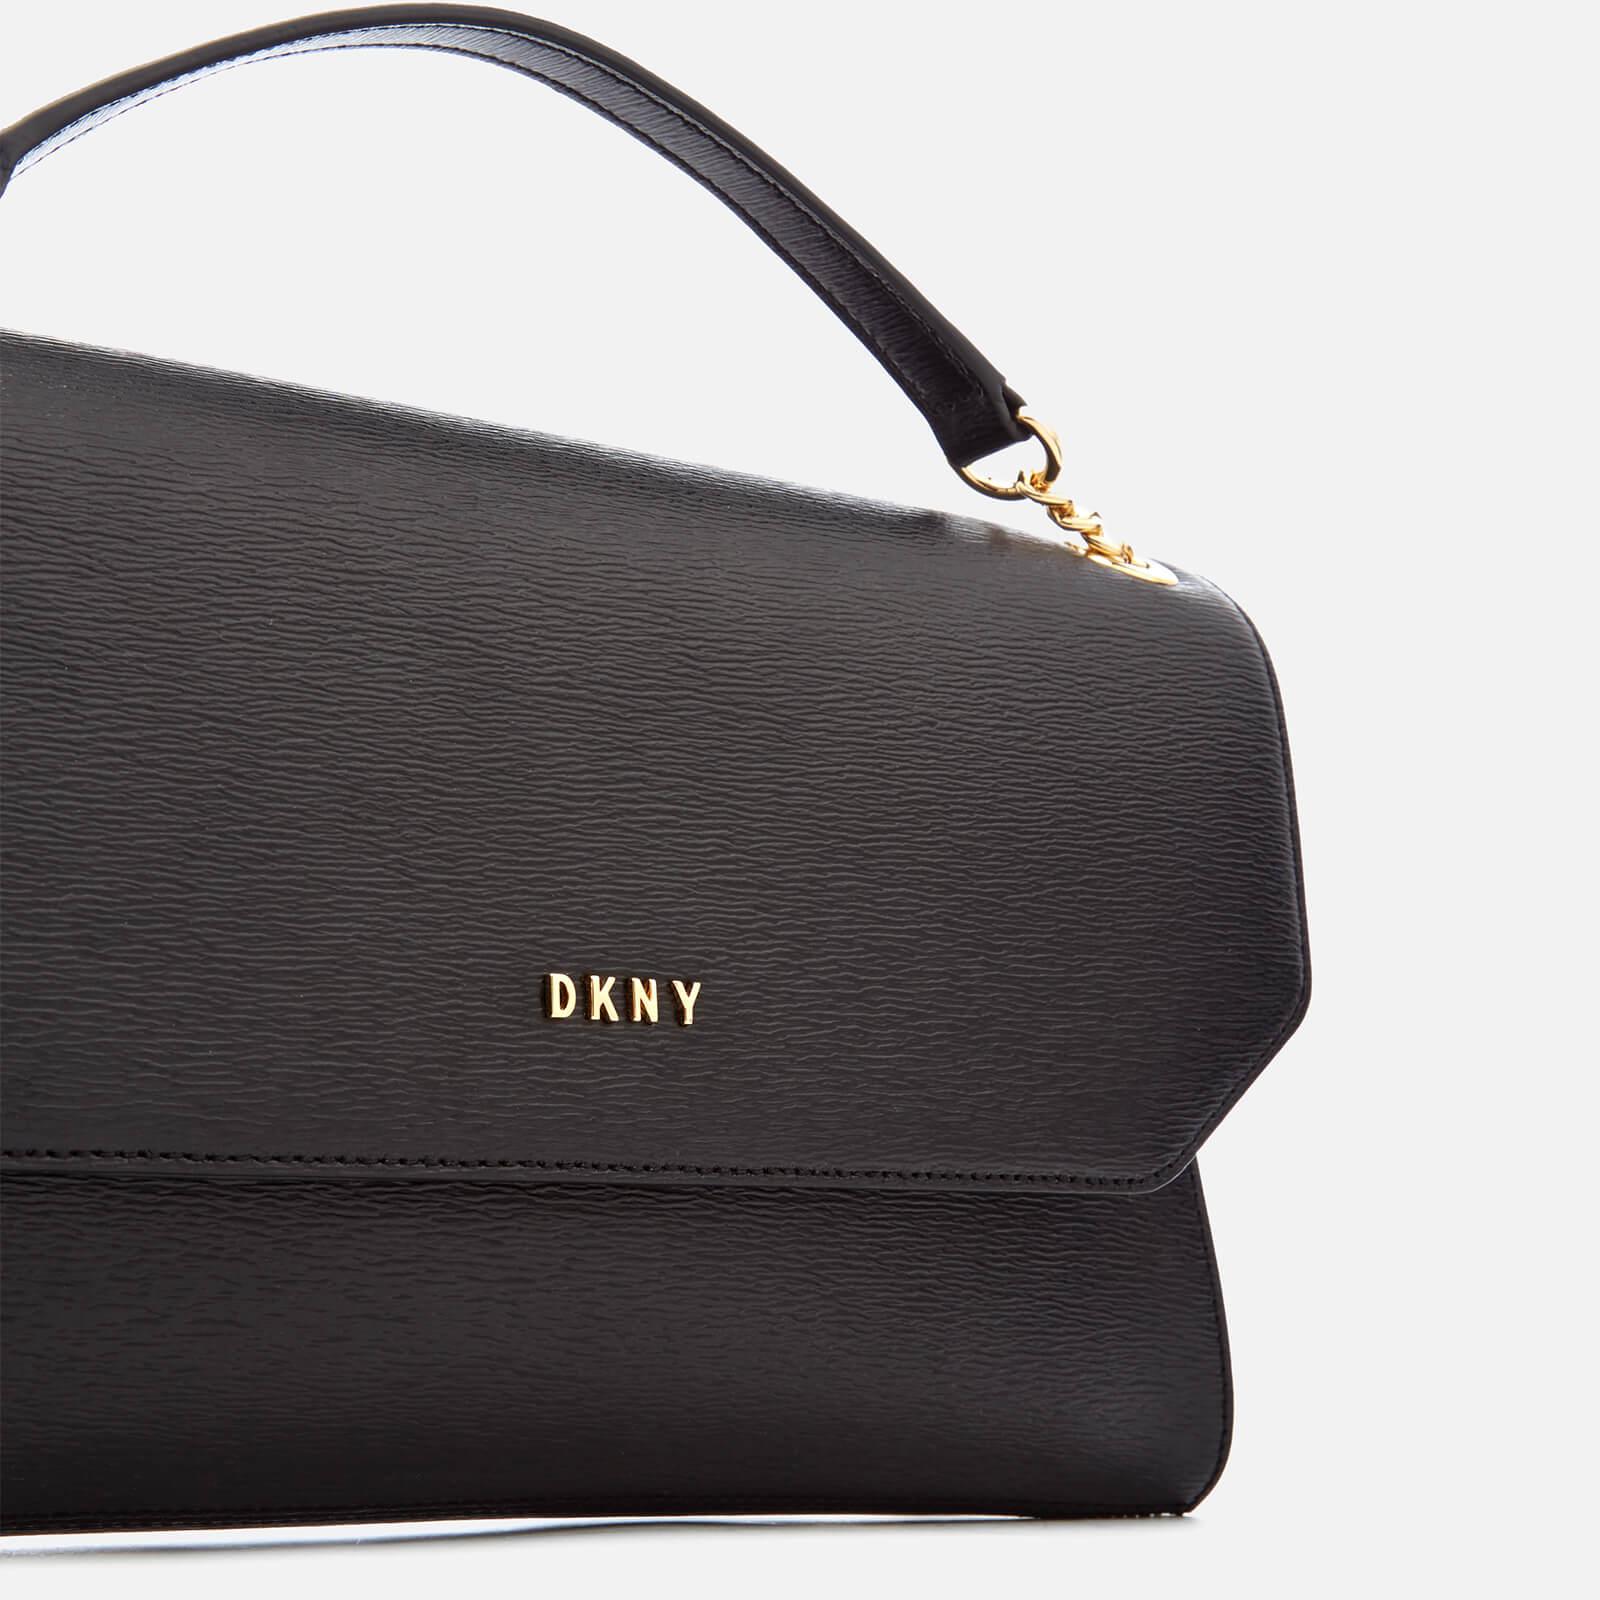 DKNY Leather Women's Bryant Envelope Clutch Bag in Black - Lyst